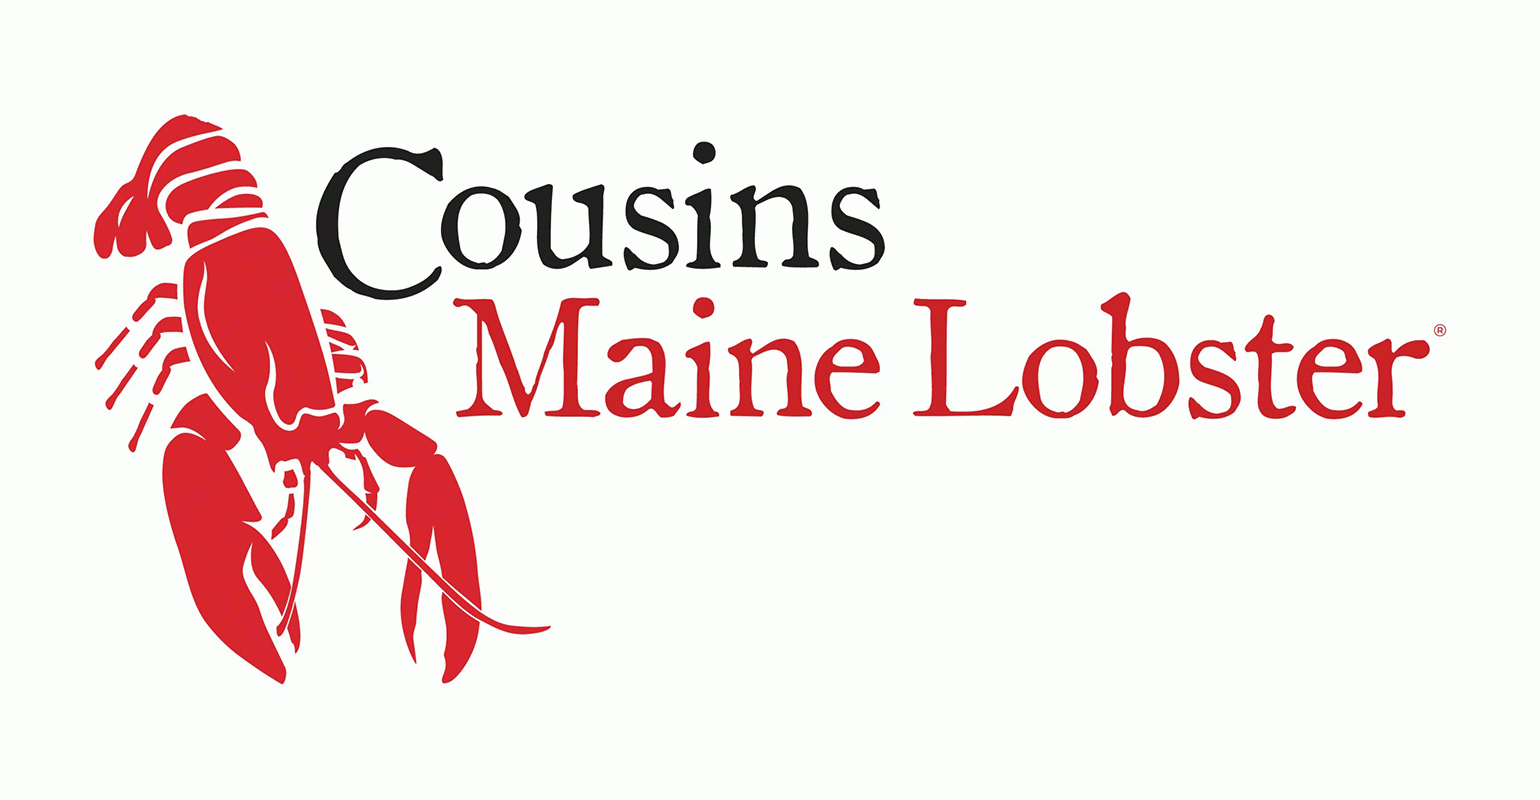 Cousins Maine Lobster franchisee captures new market Nation's